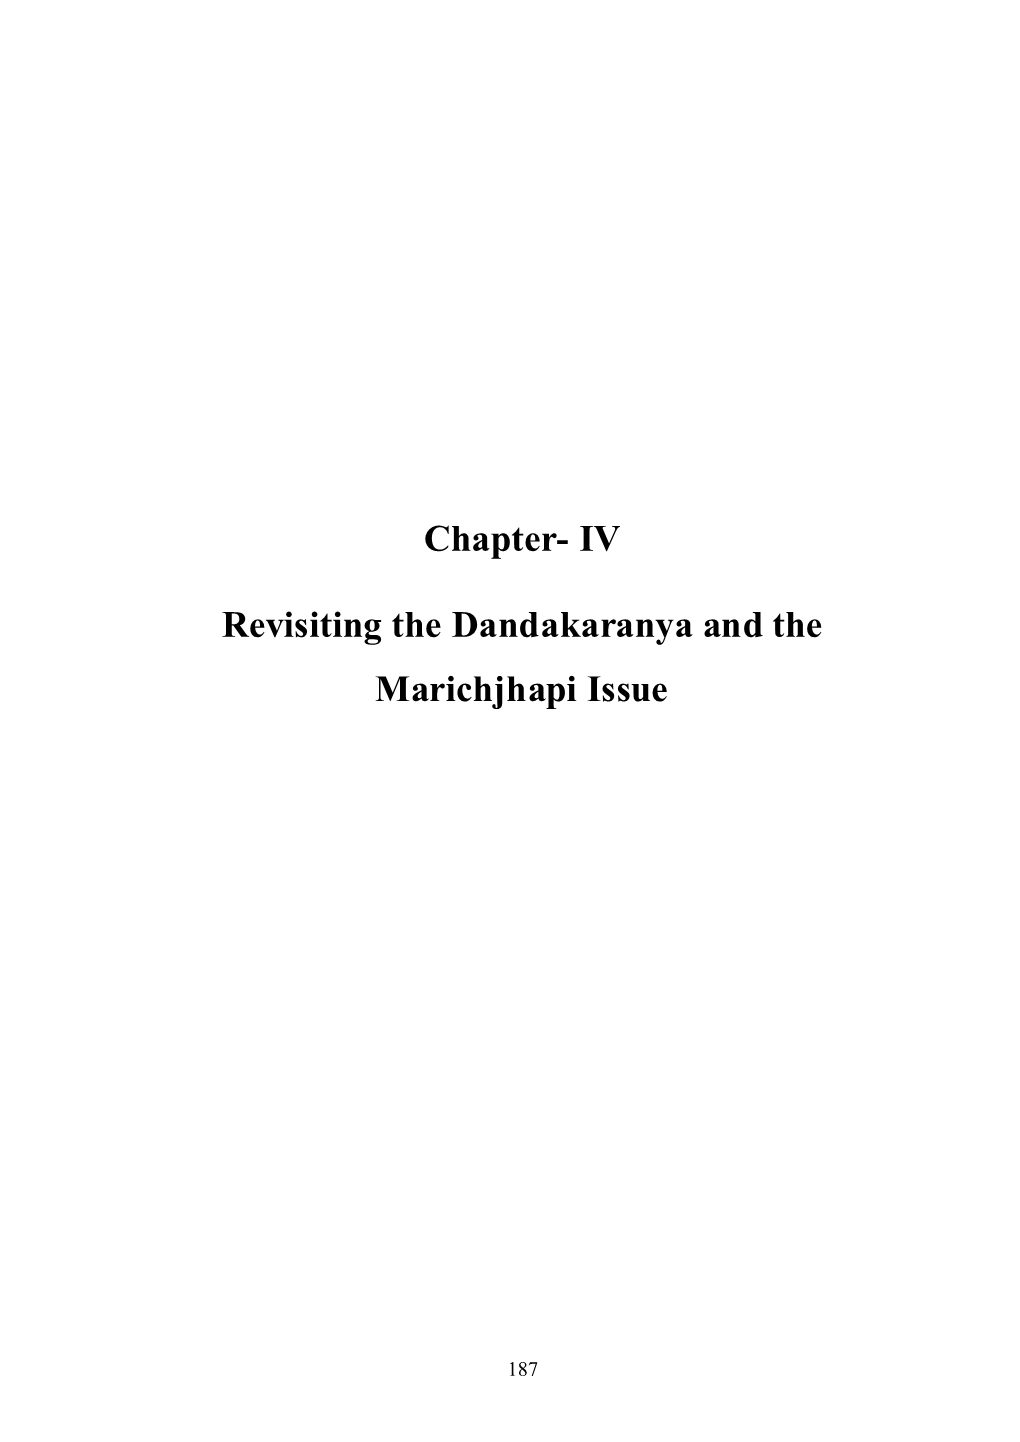 Chapter- IV Revisiting the Dandakaranya and the Marichjhapi